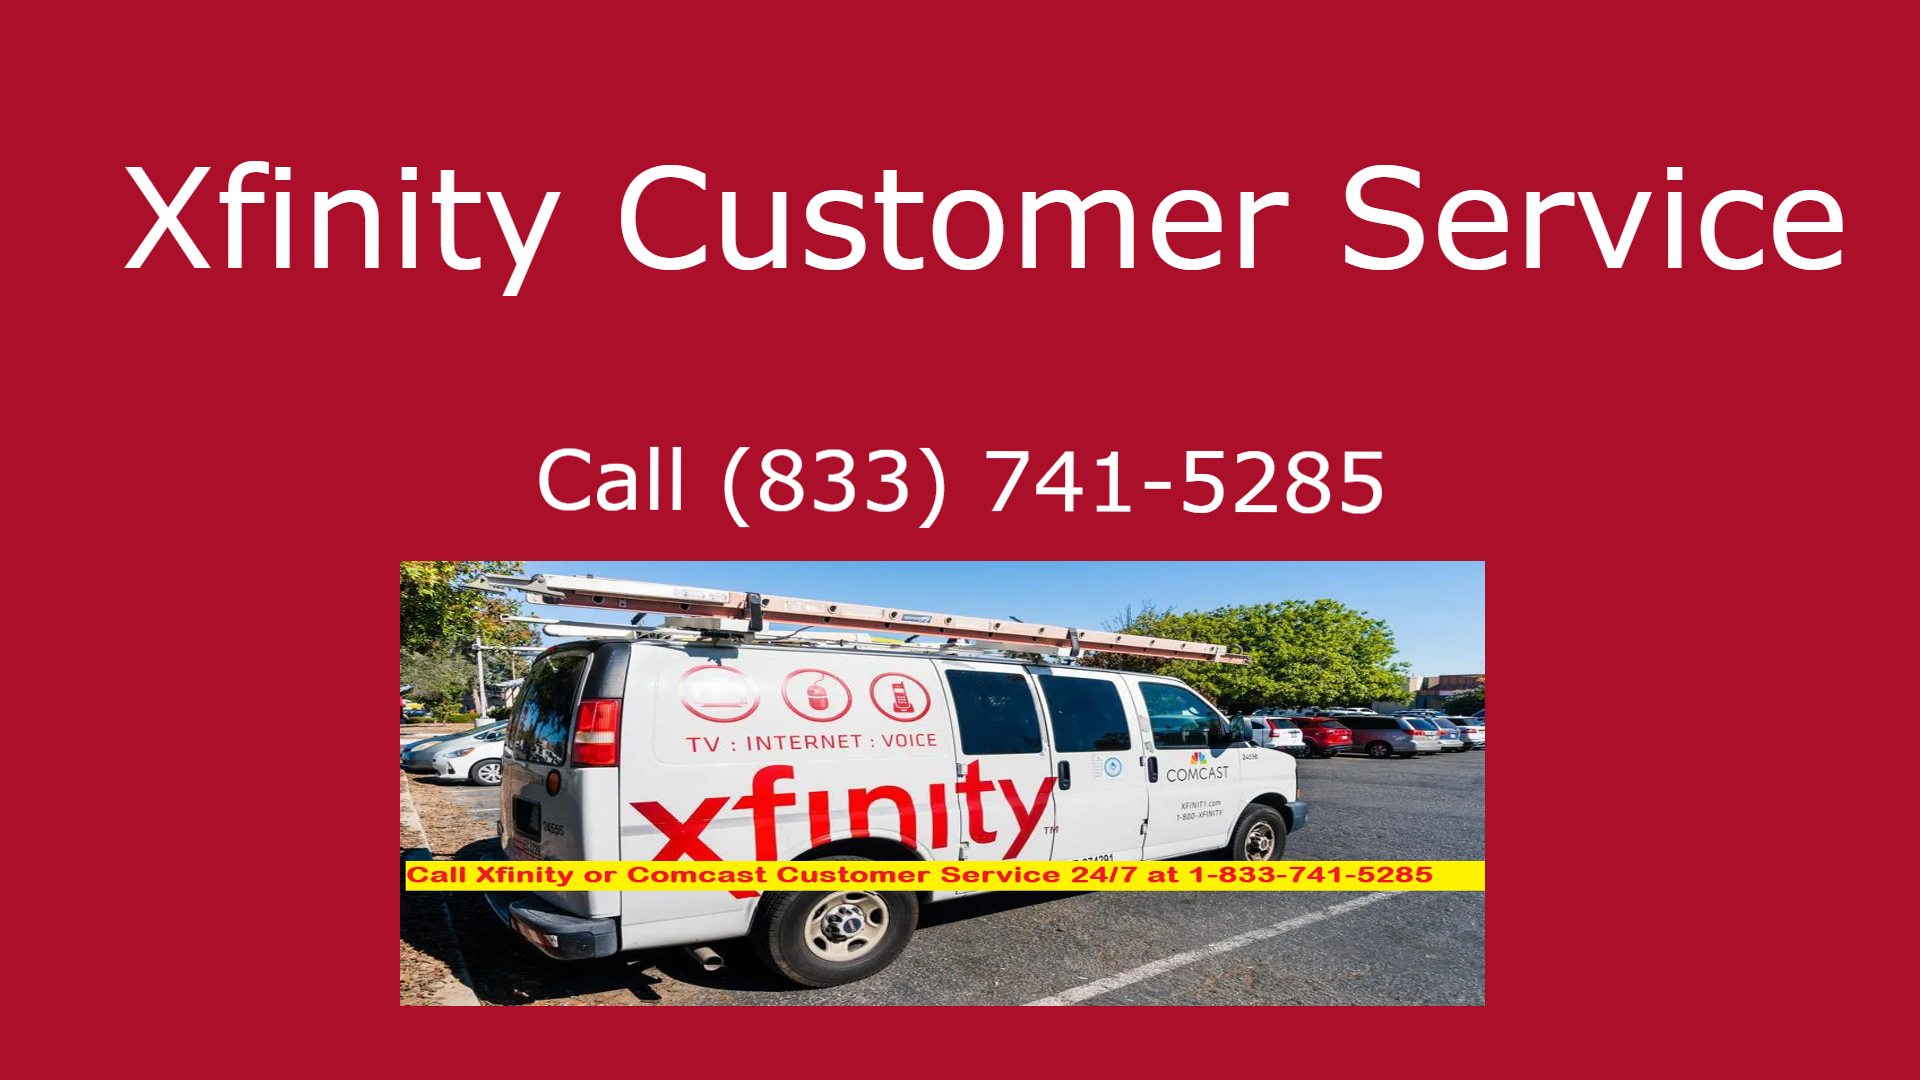 xfinity customer service